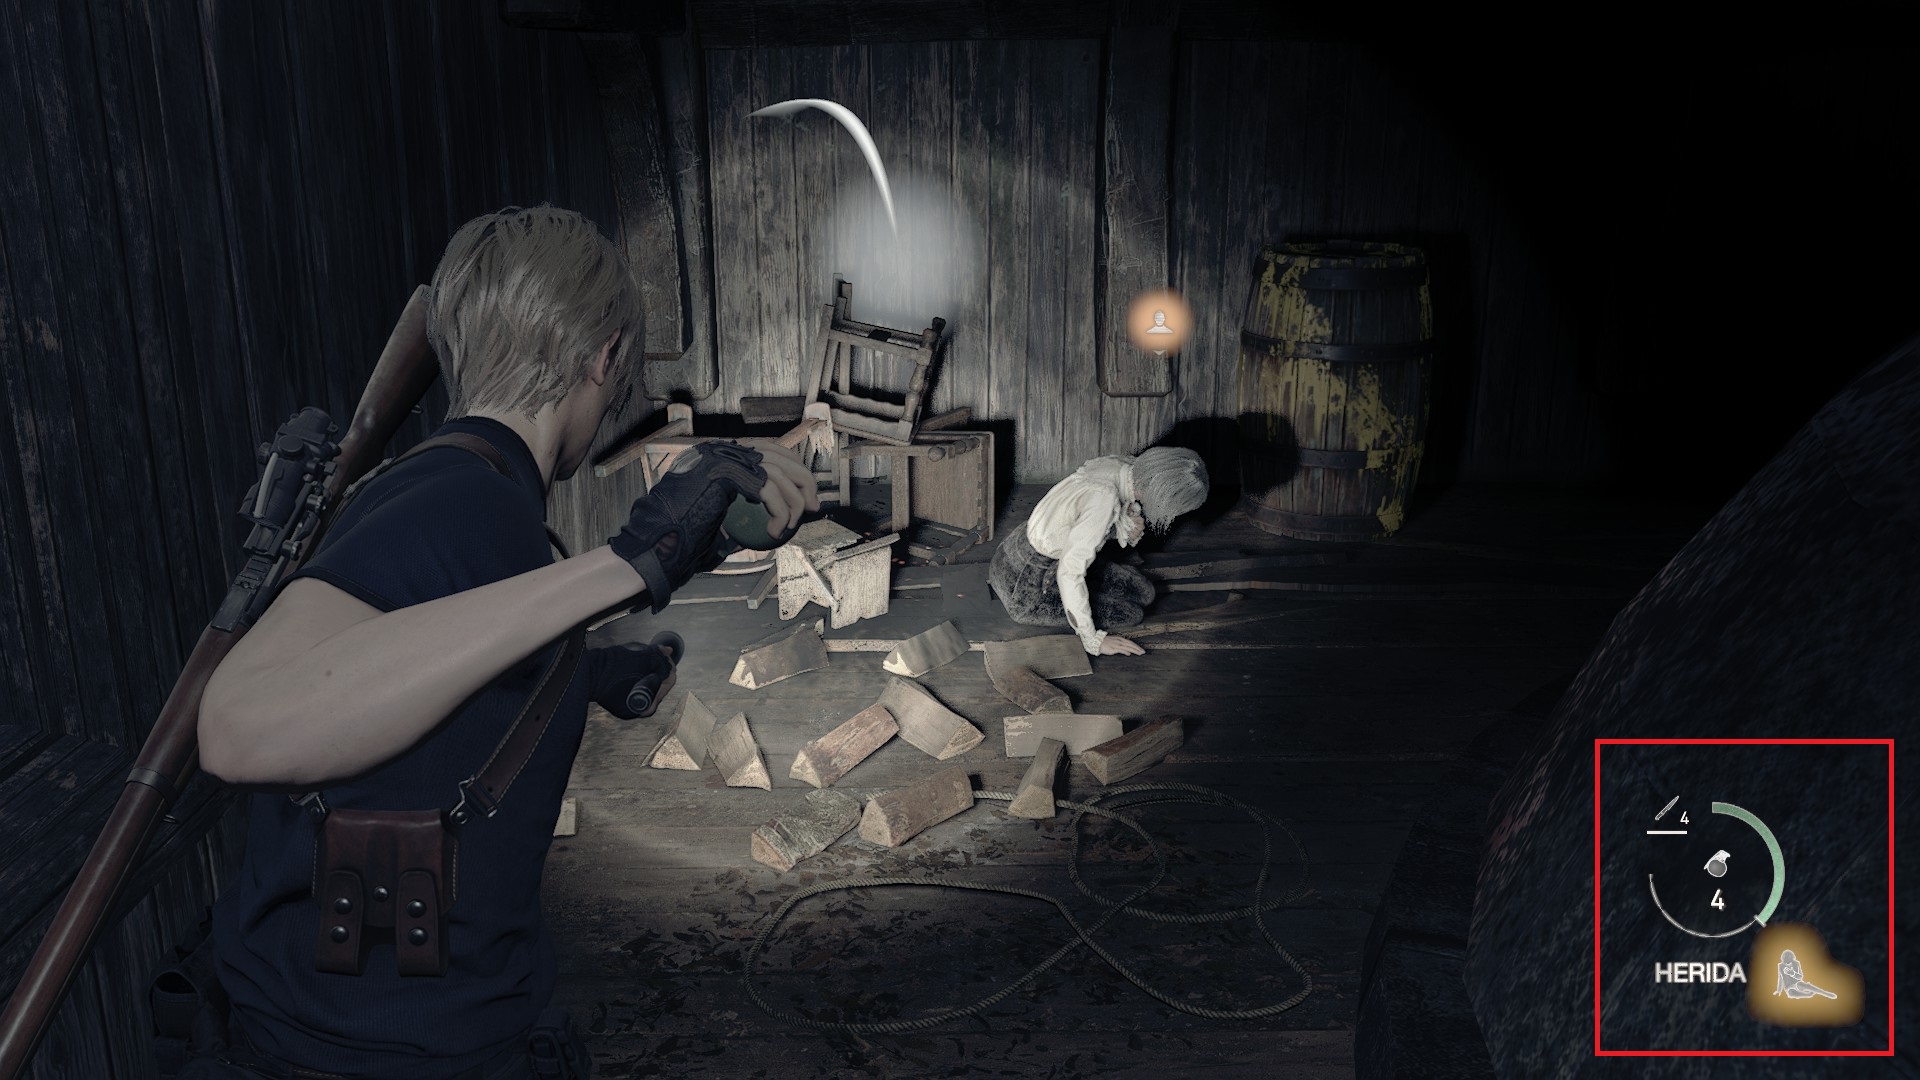 Finished Resident Evil 4 Remake? Here are 6 Resident Evil Spin